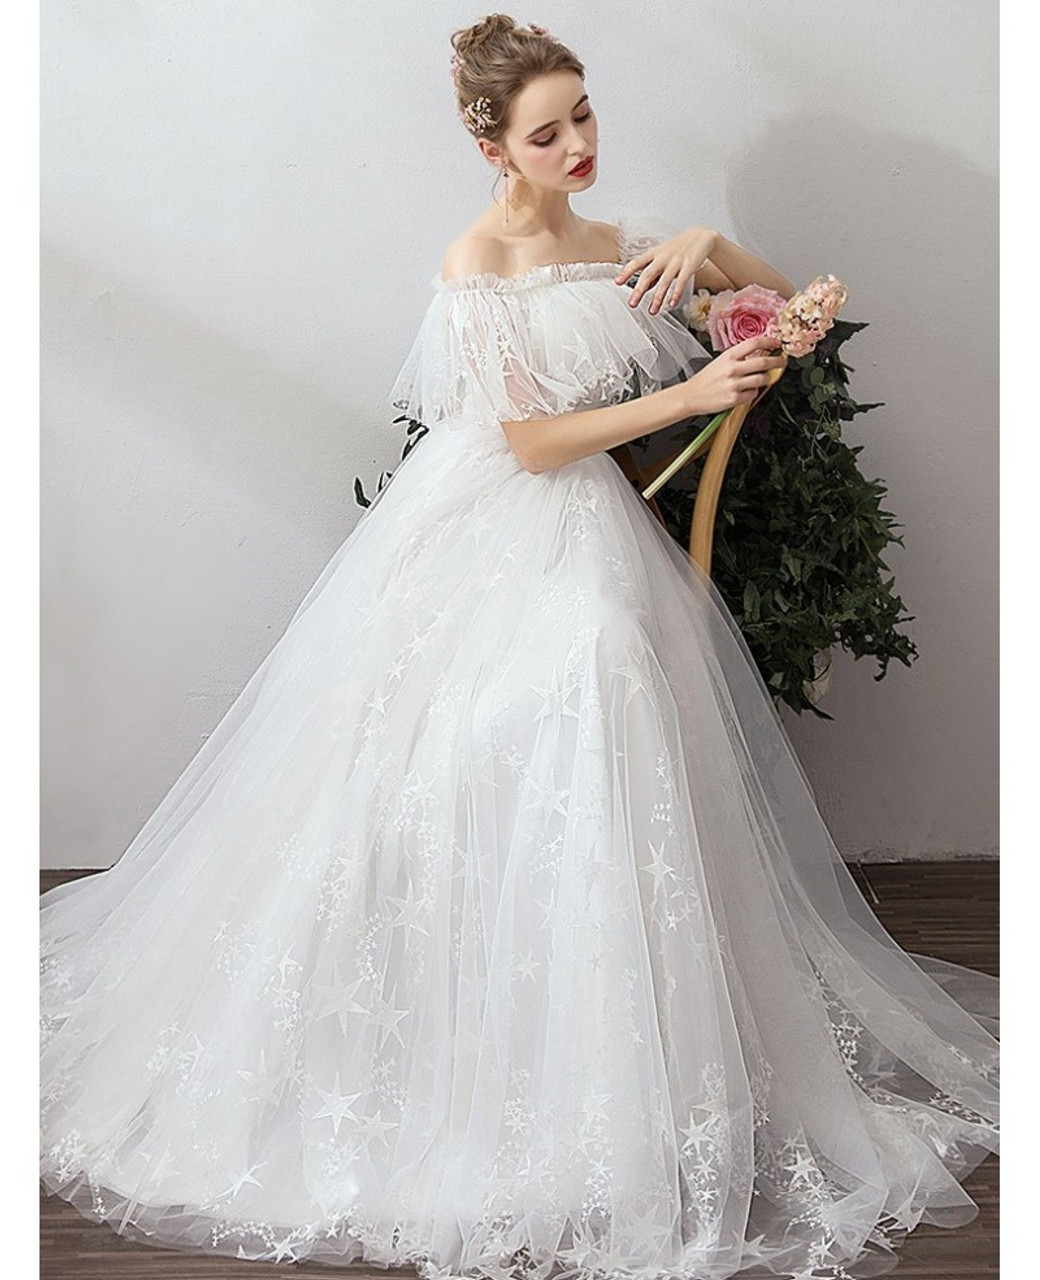 The 16 Best Corset Wedding Dresses of 2023